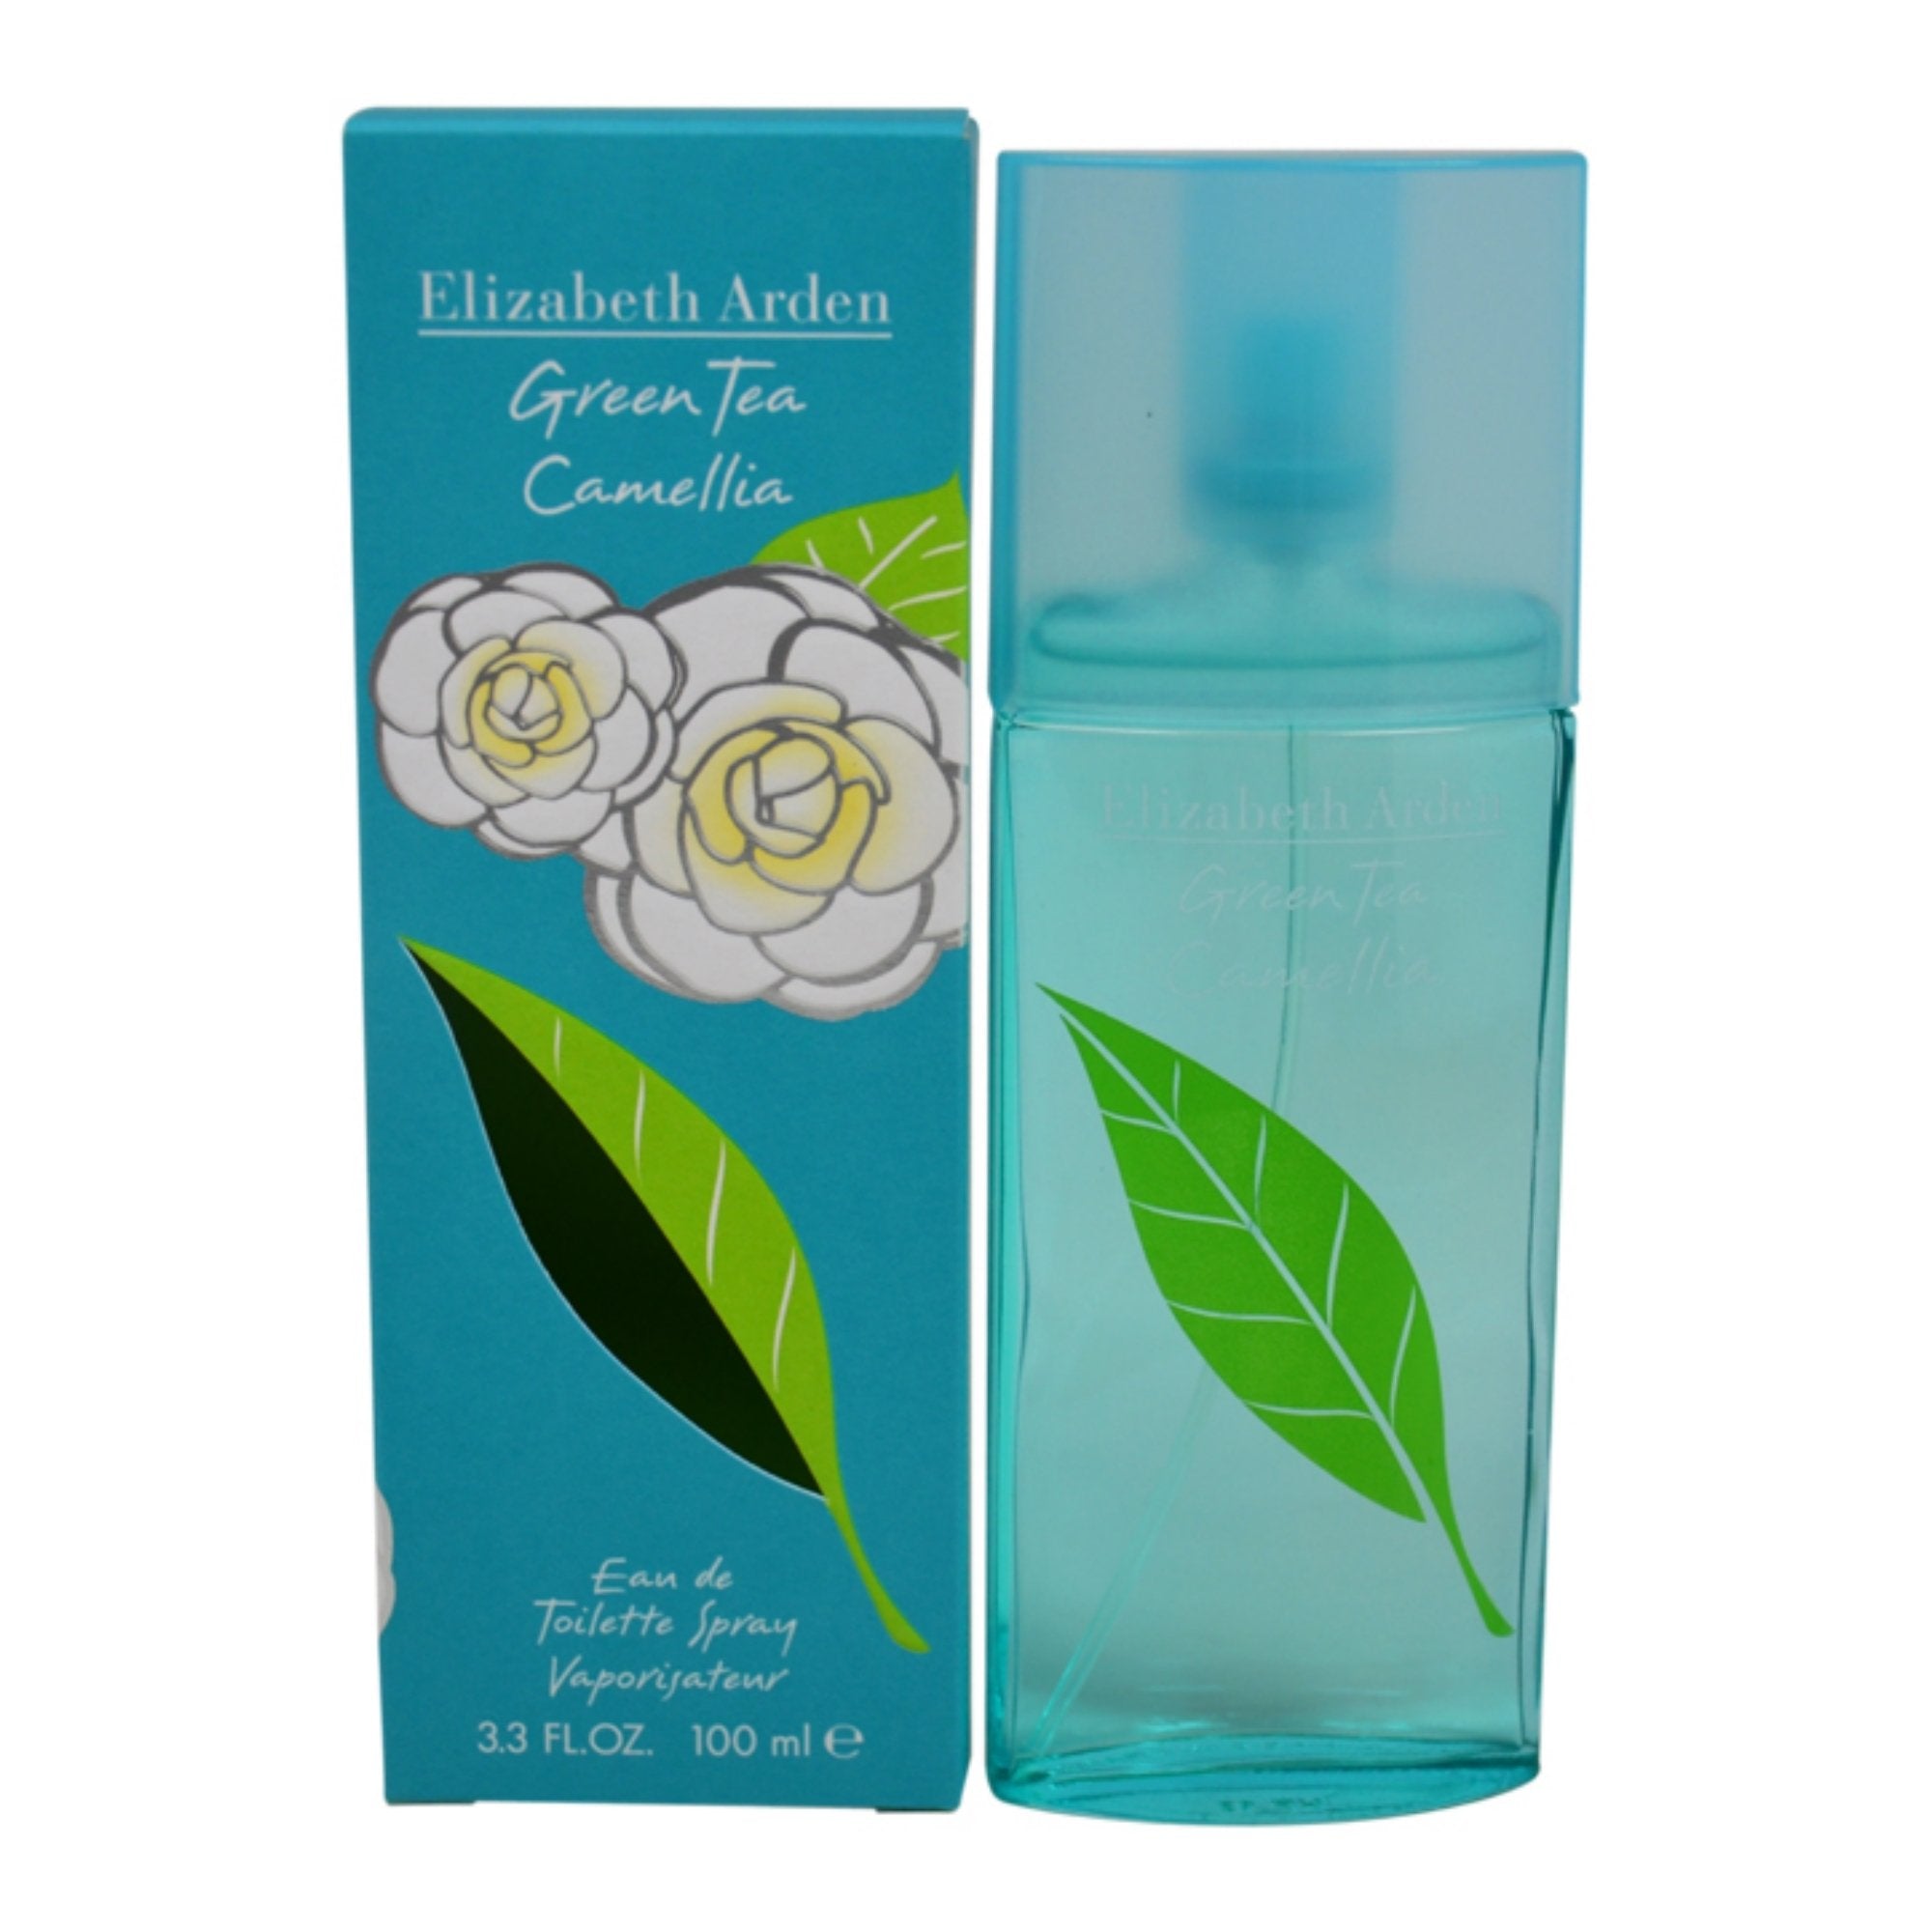 ELIZABETH ARDEN - Green Tea Camellia para mujer / 100 ml Eau De Toilette Spray